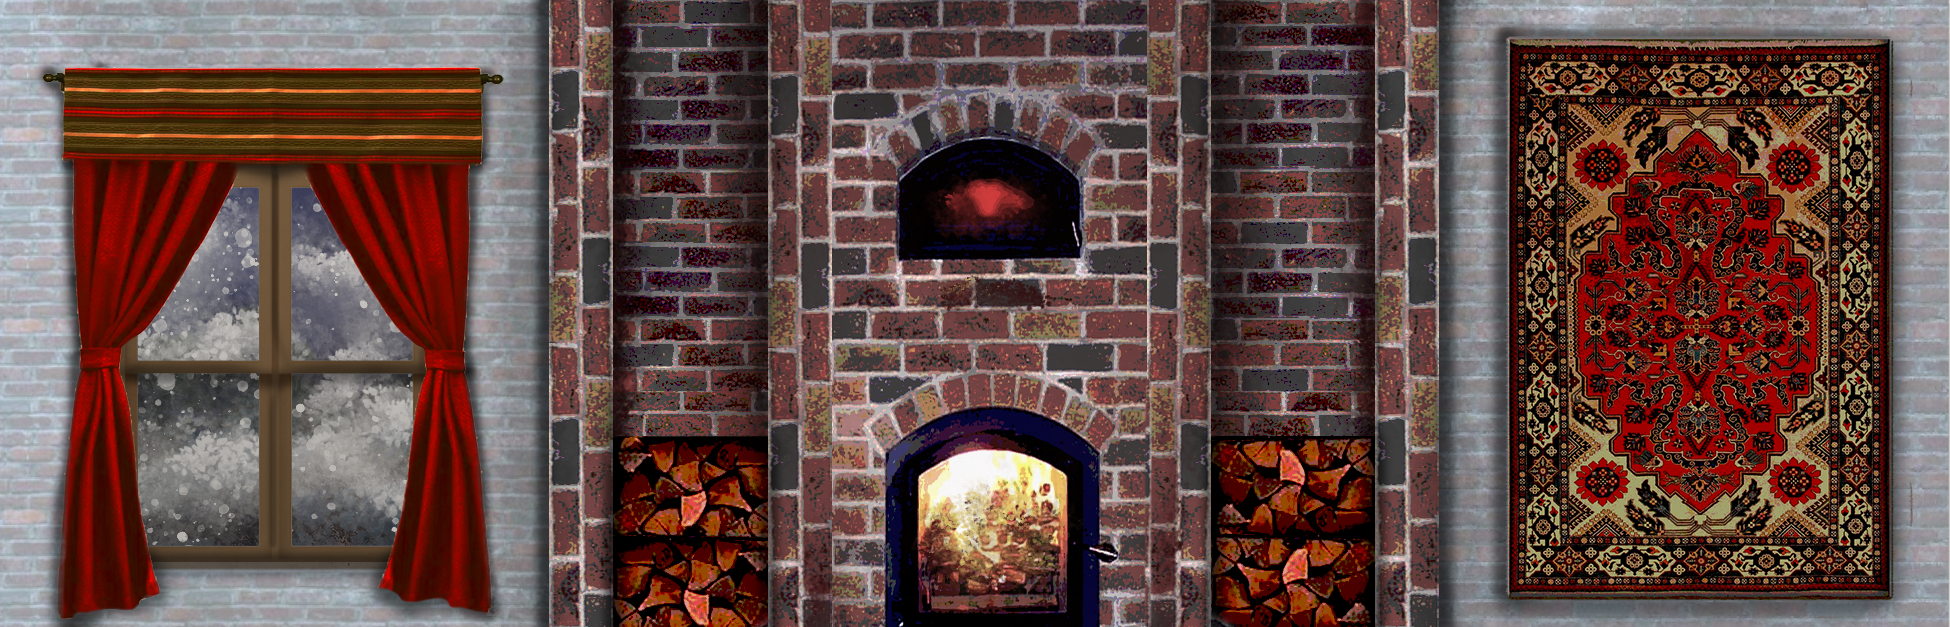 SU Three Sisters Fireplace wallv3.png